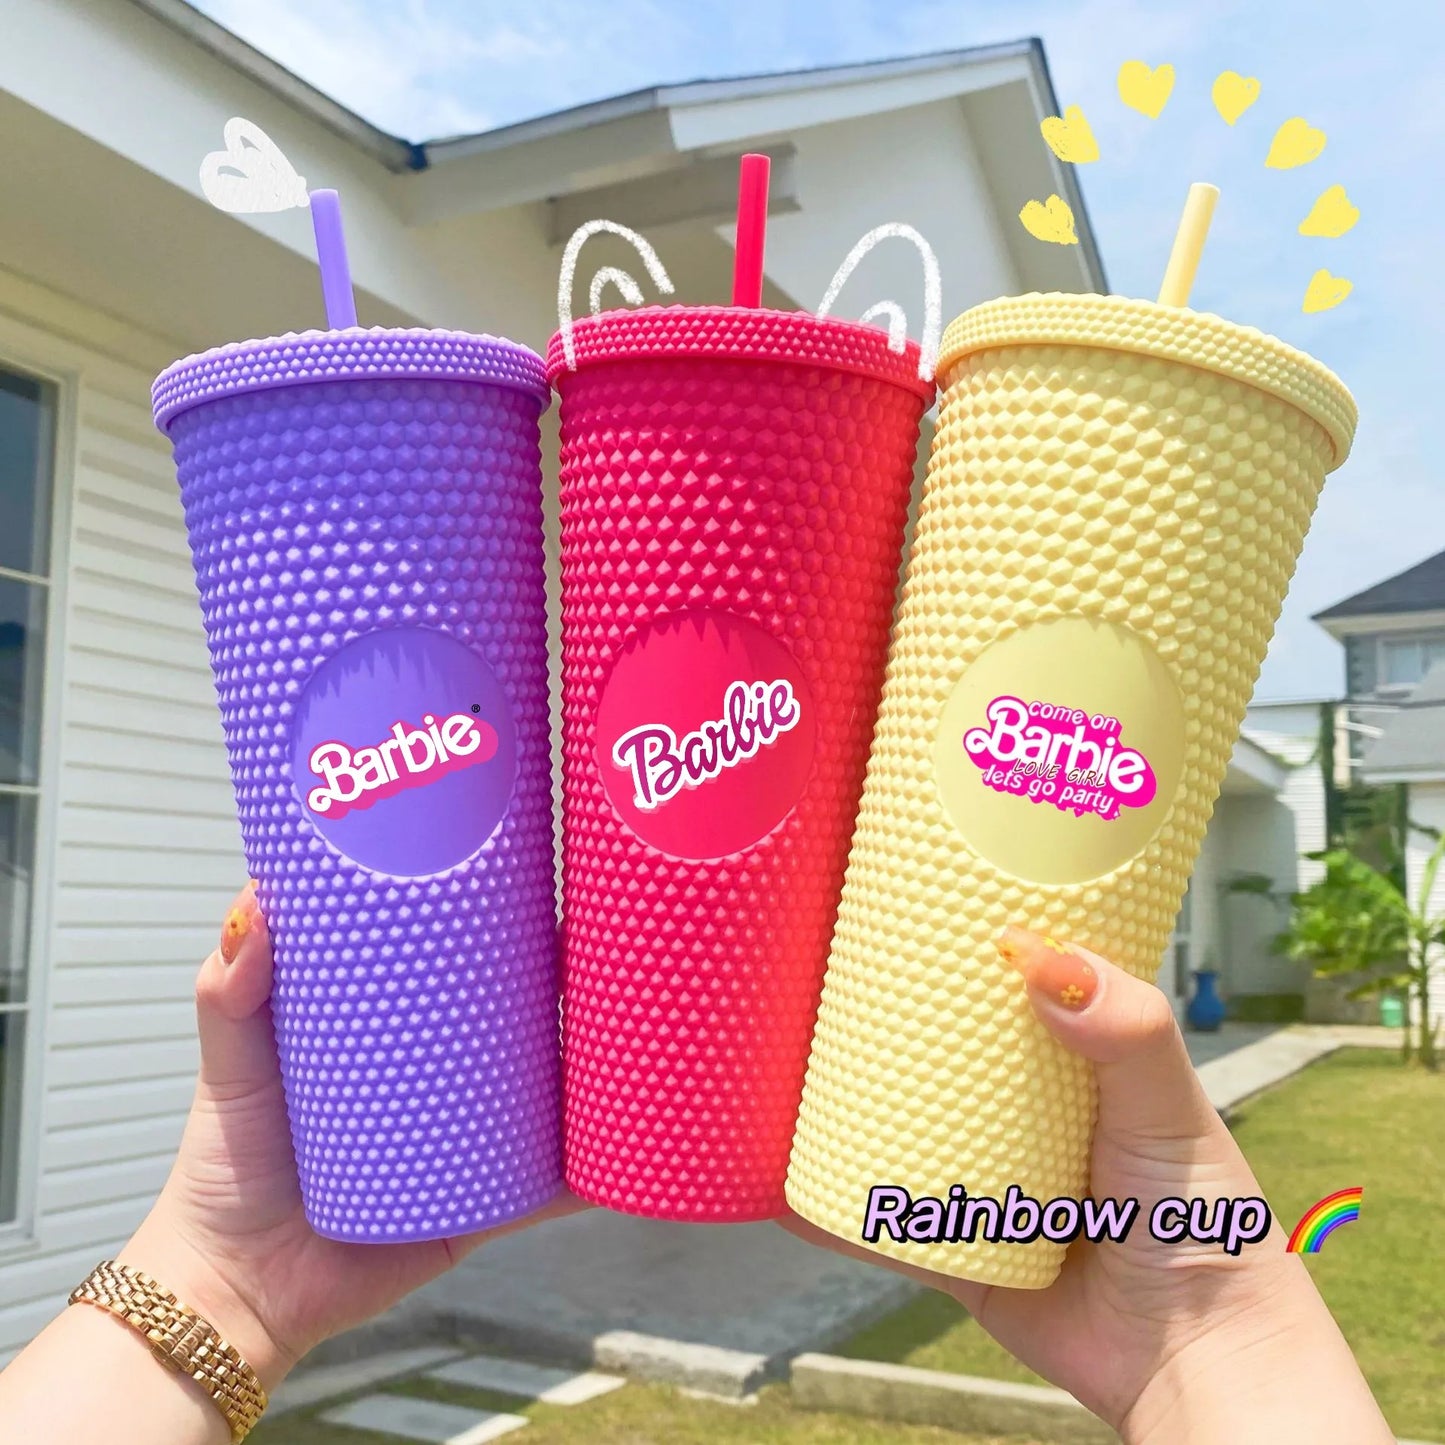 Premium Quality Barbie Plastic Straw Cup - Coffee-Pineapple Cup